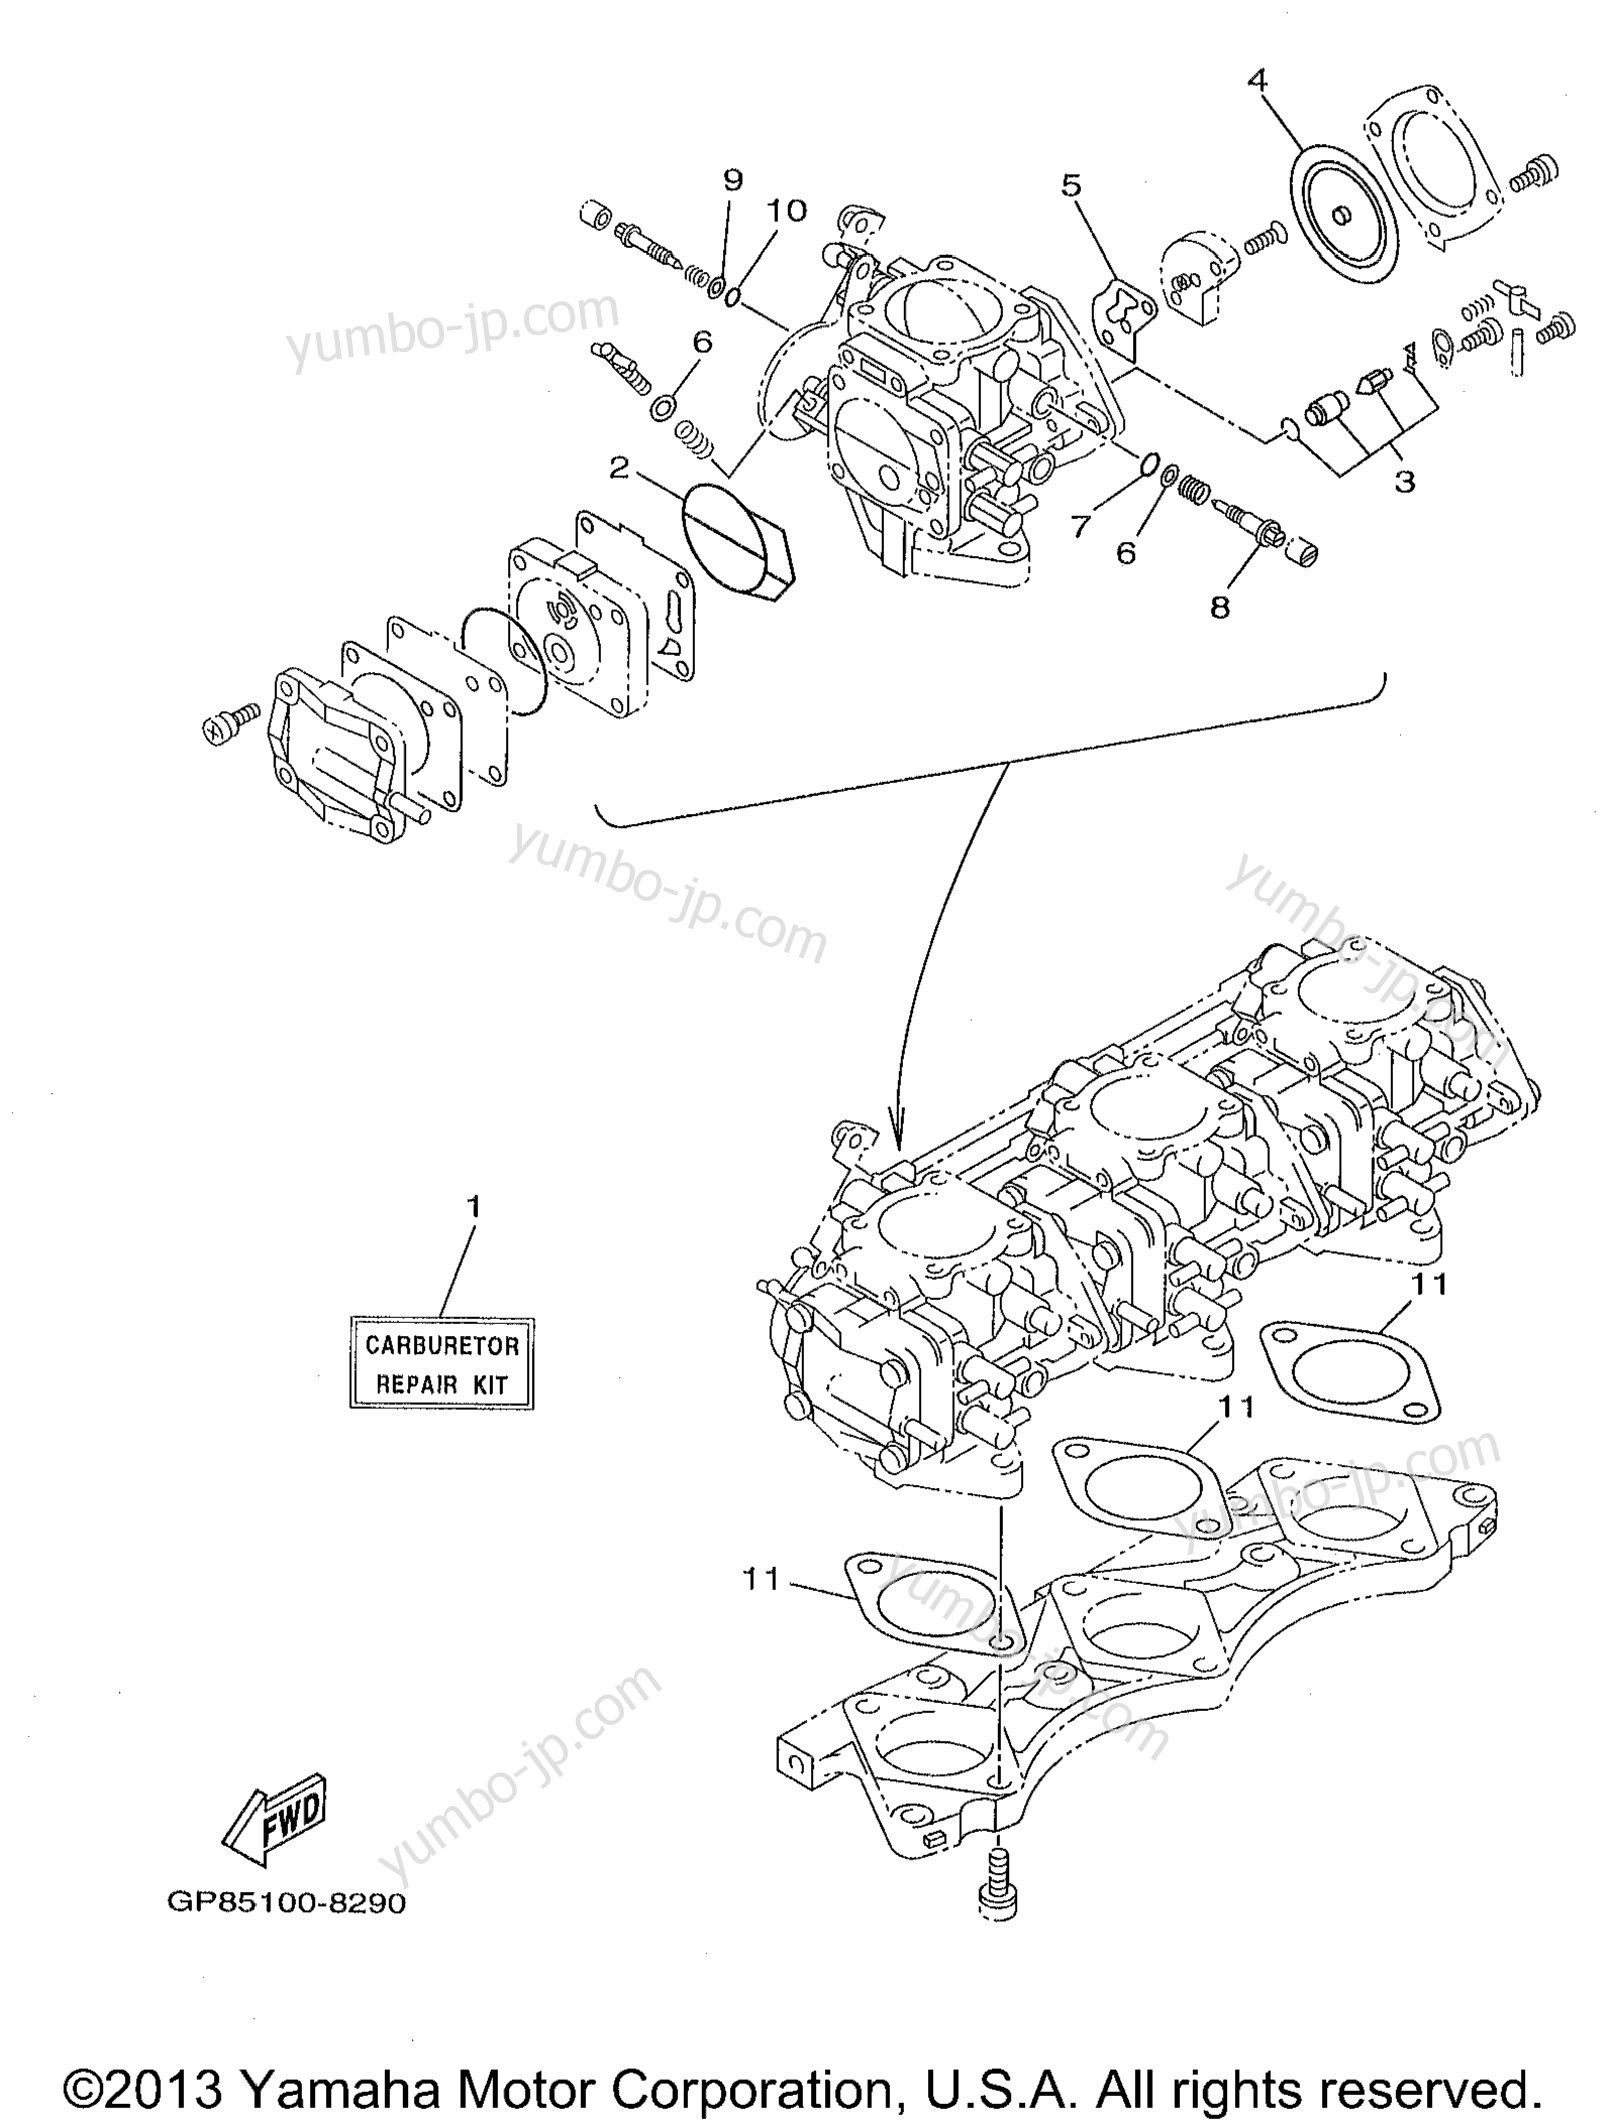 Repair Kit 2 для гидроциклов YAMAHA WAVE RUNNER XL1200 (XL1200W) 1998 г.